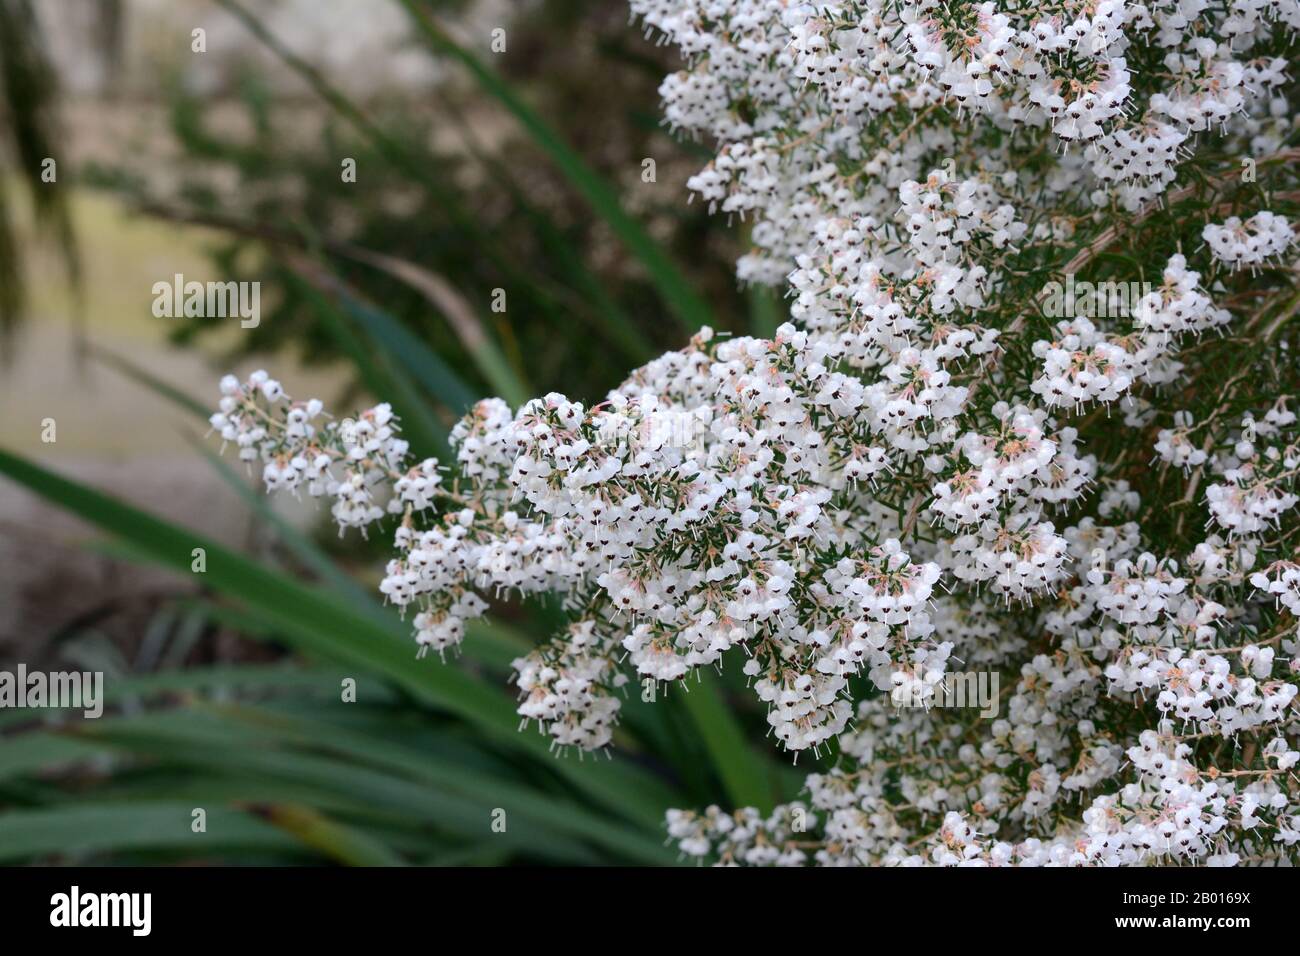 Erica canaliculata Brezo Canalizado grandes aerosoles de flores blancas en forma de campana Foto de stock